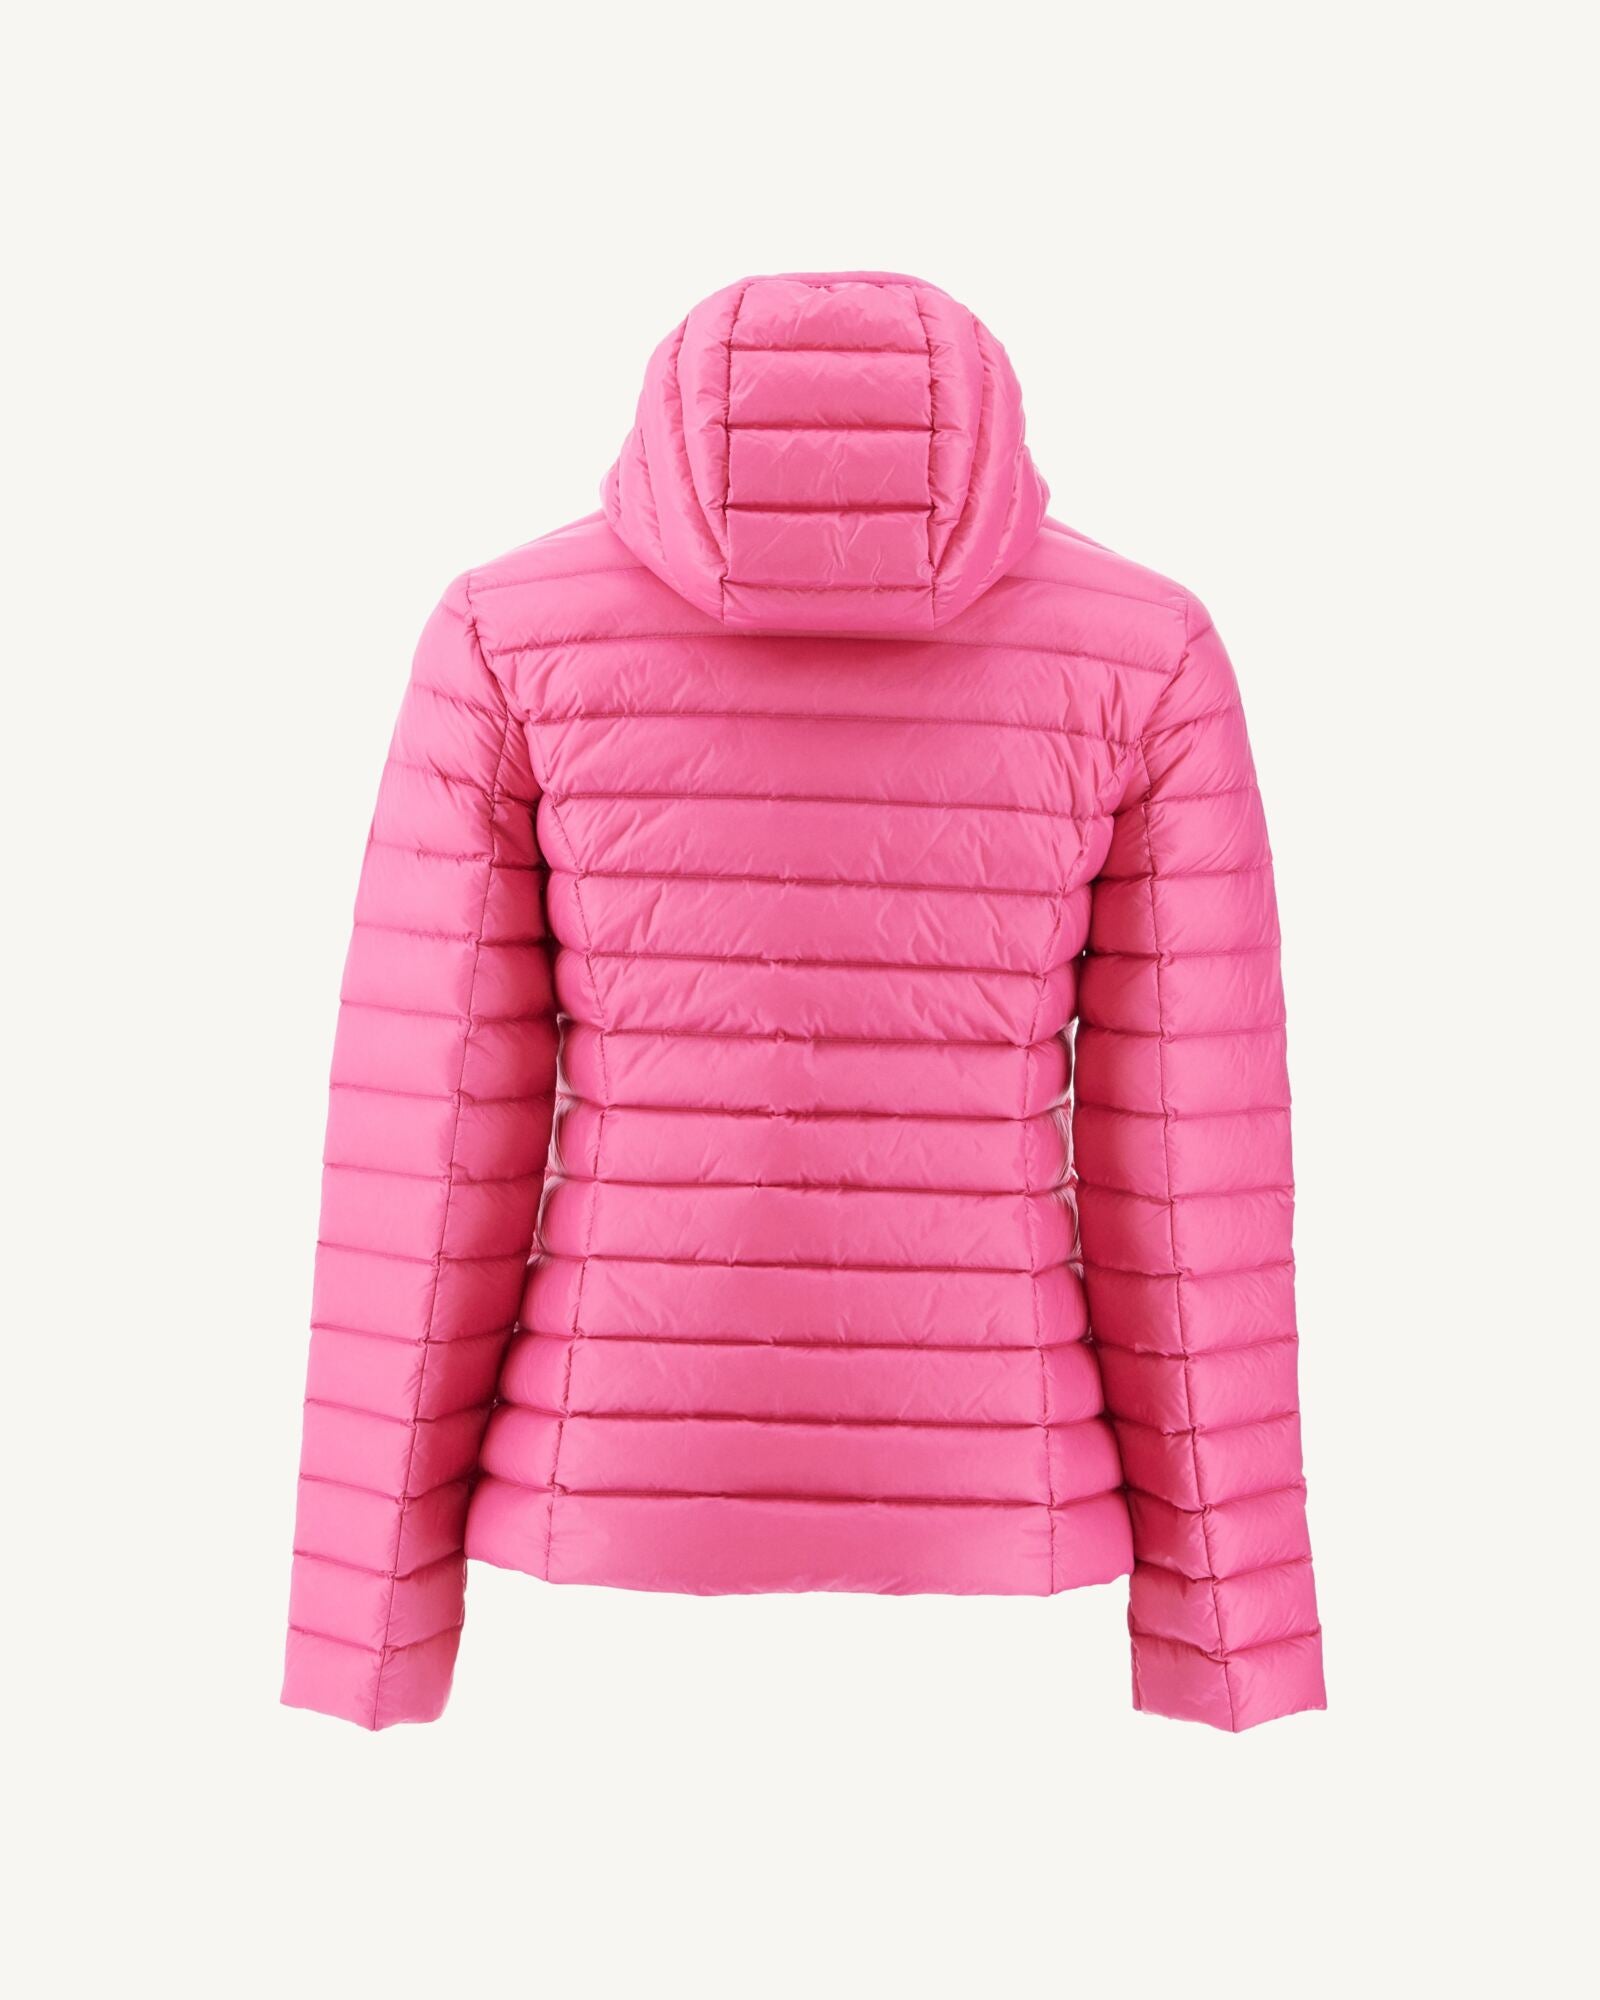 Light hooded down JOTT - pink Cloe jacket Intense